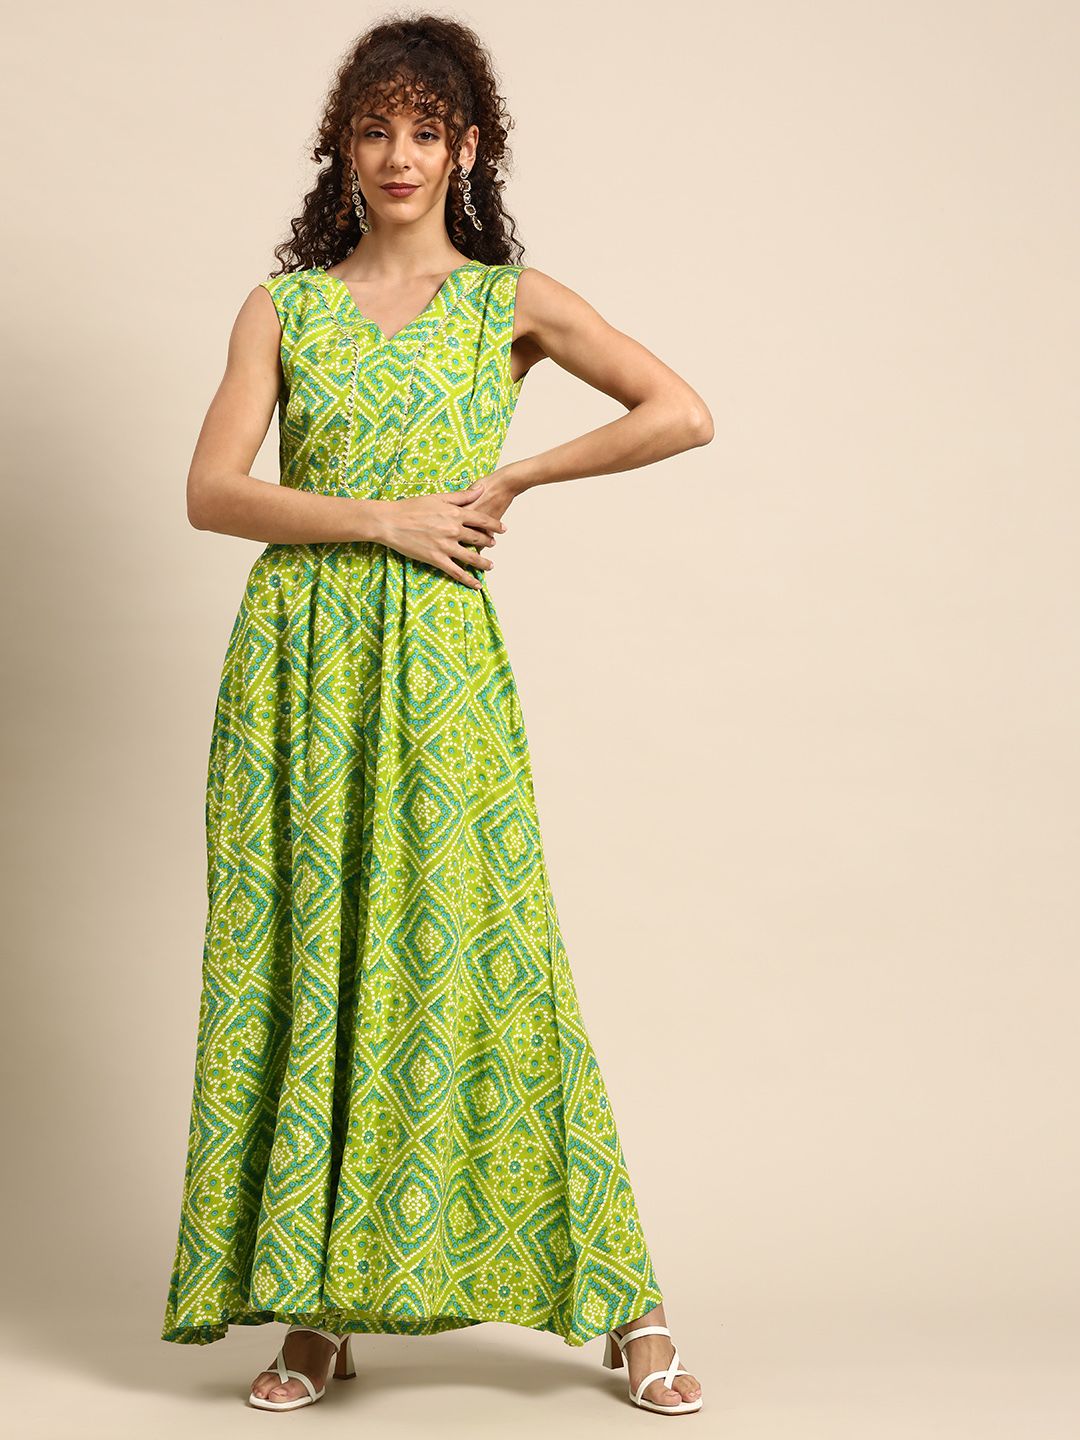 MABISH by Sonal Jain Bandhani Printed Embellished Culotte Jumpsuit Price in India